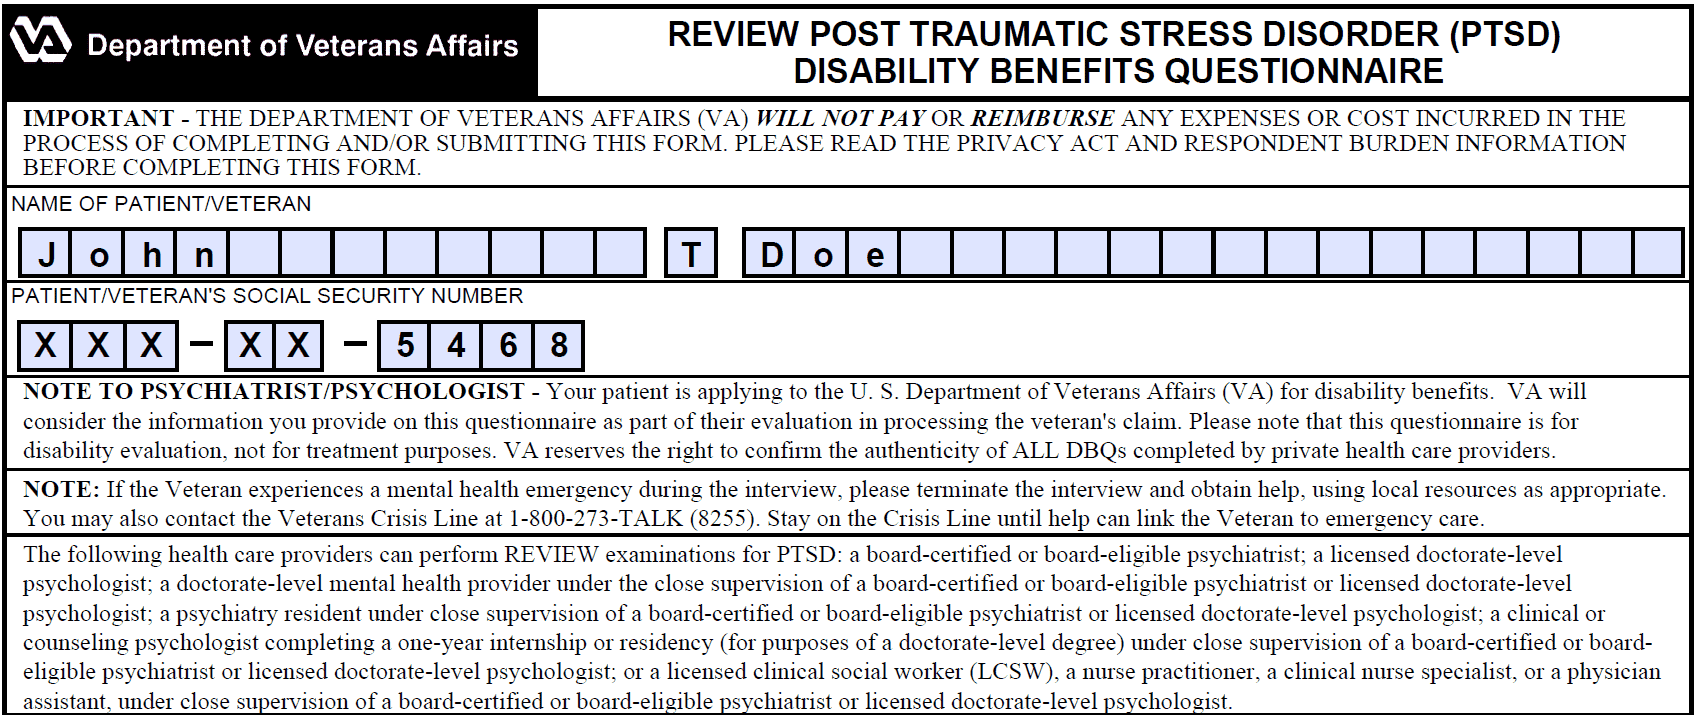 PTSD DBQ Review Form